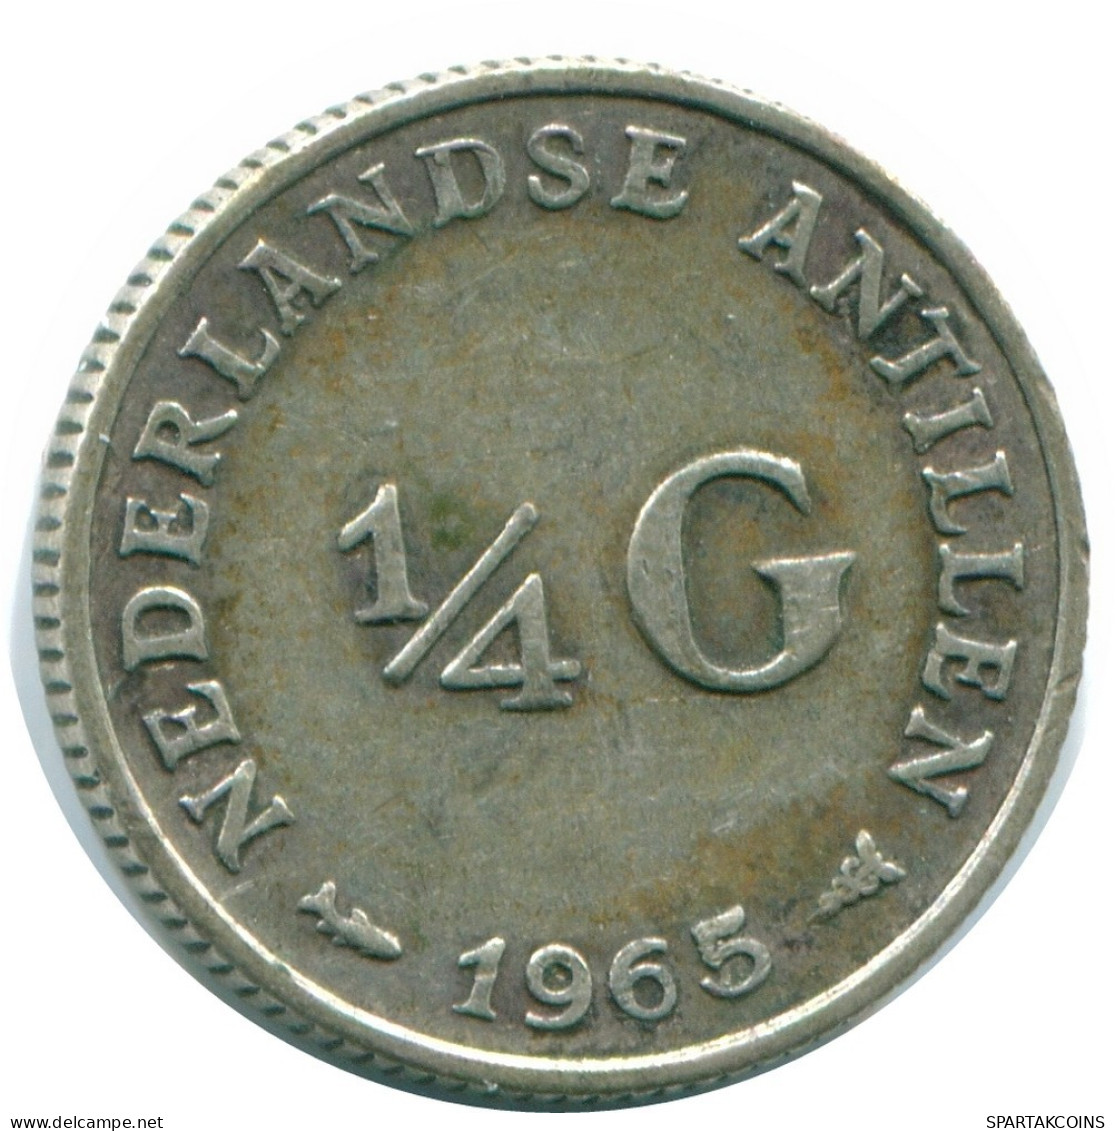 1/4 GULDEN 1965 NIEDERLÄNDISCHE ANTILLEN SILBER Koloniale Münze #NL11339.4.D.A - Netherlands Antilles